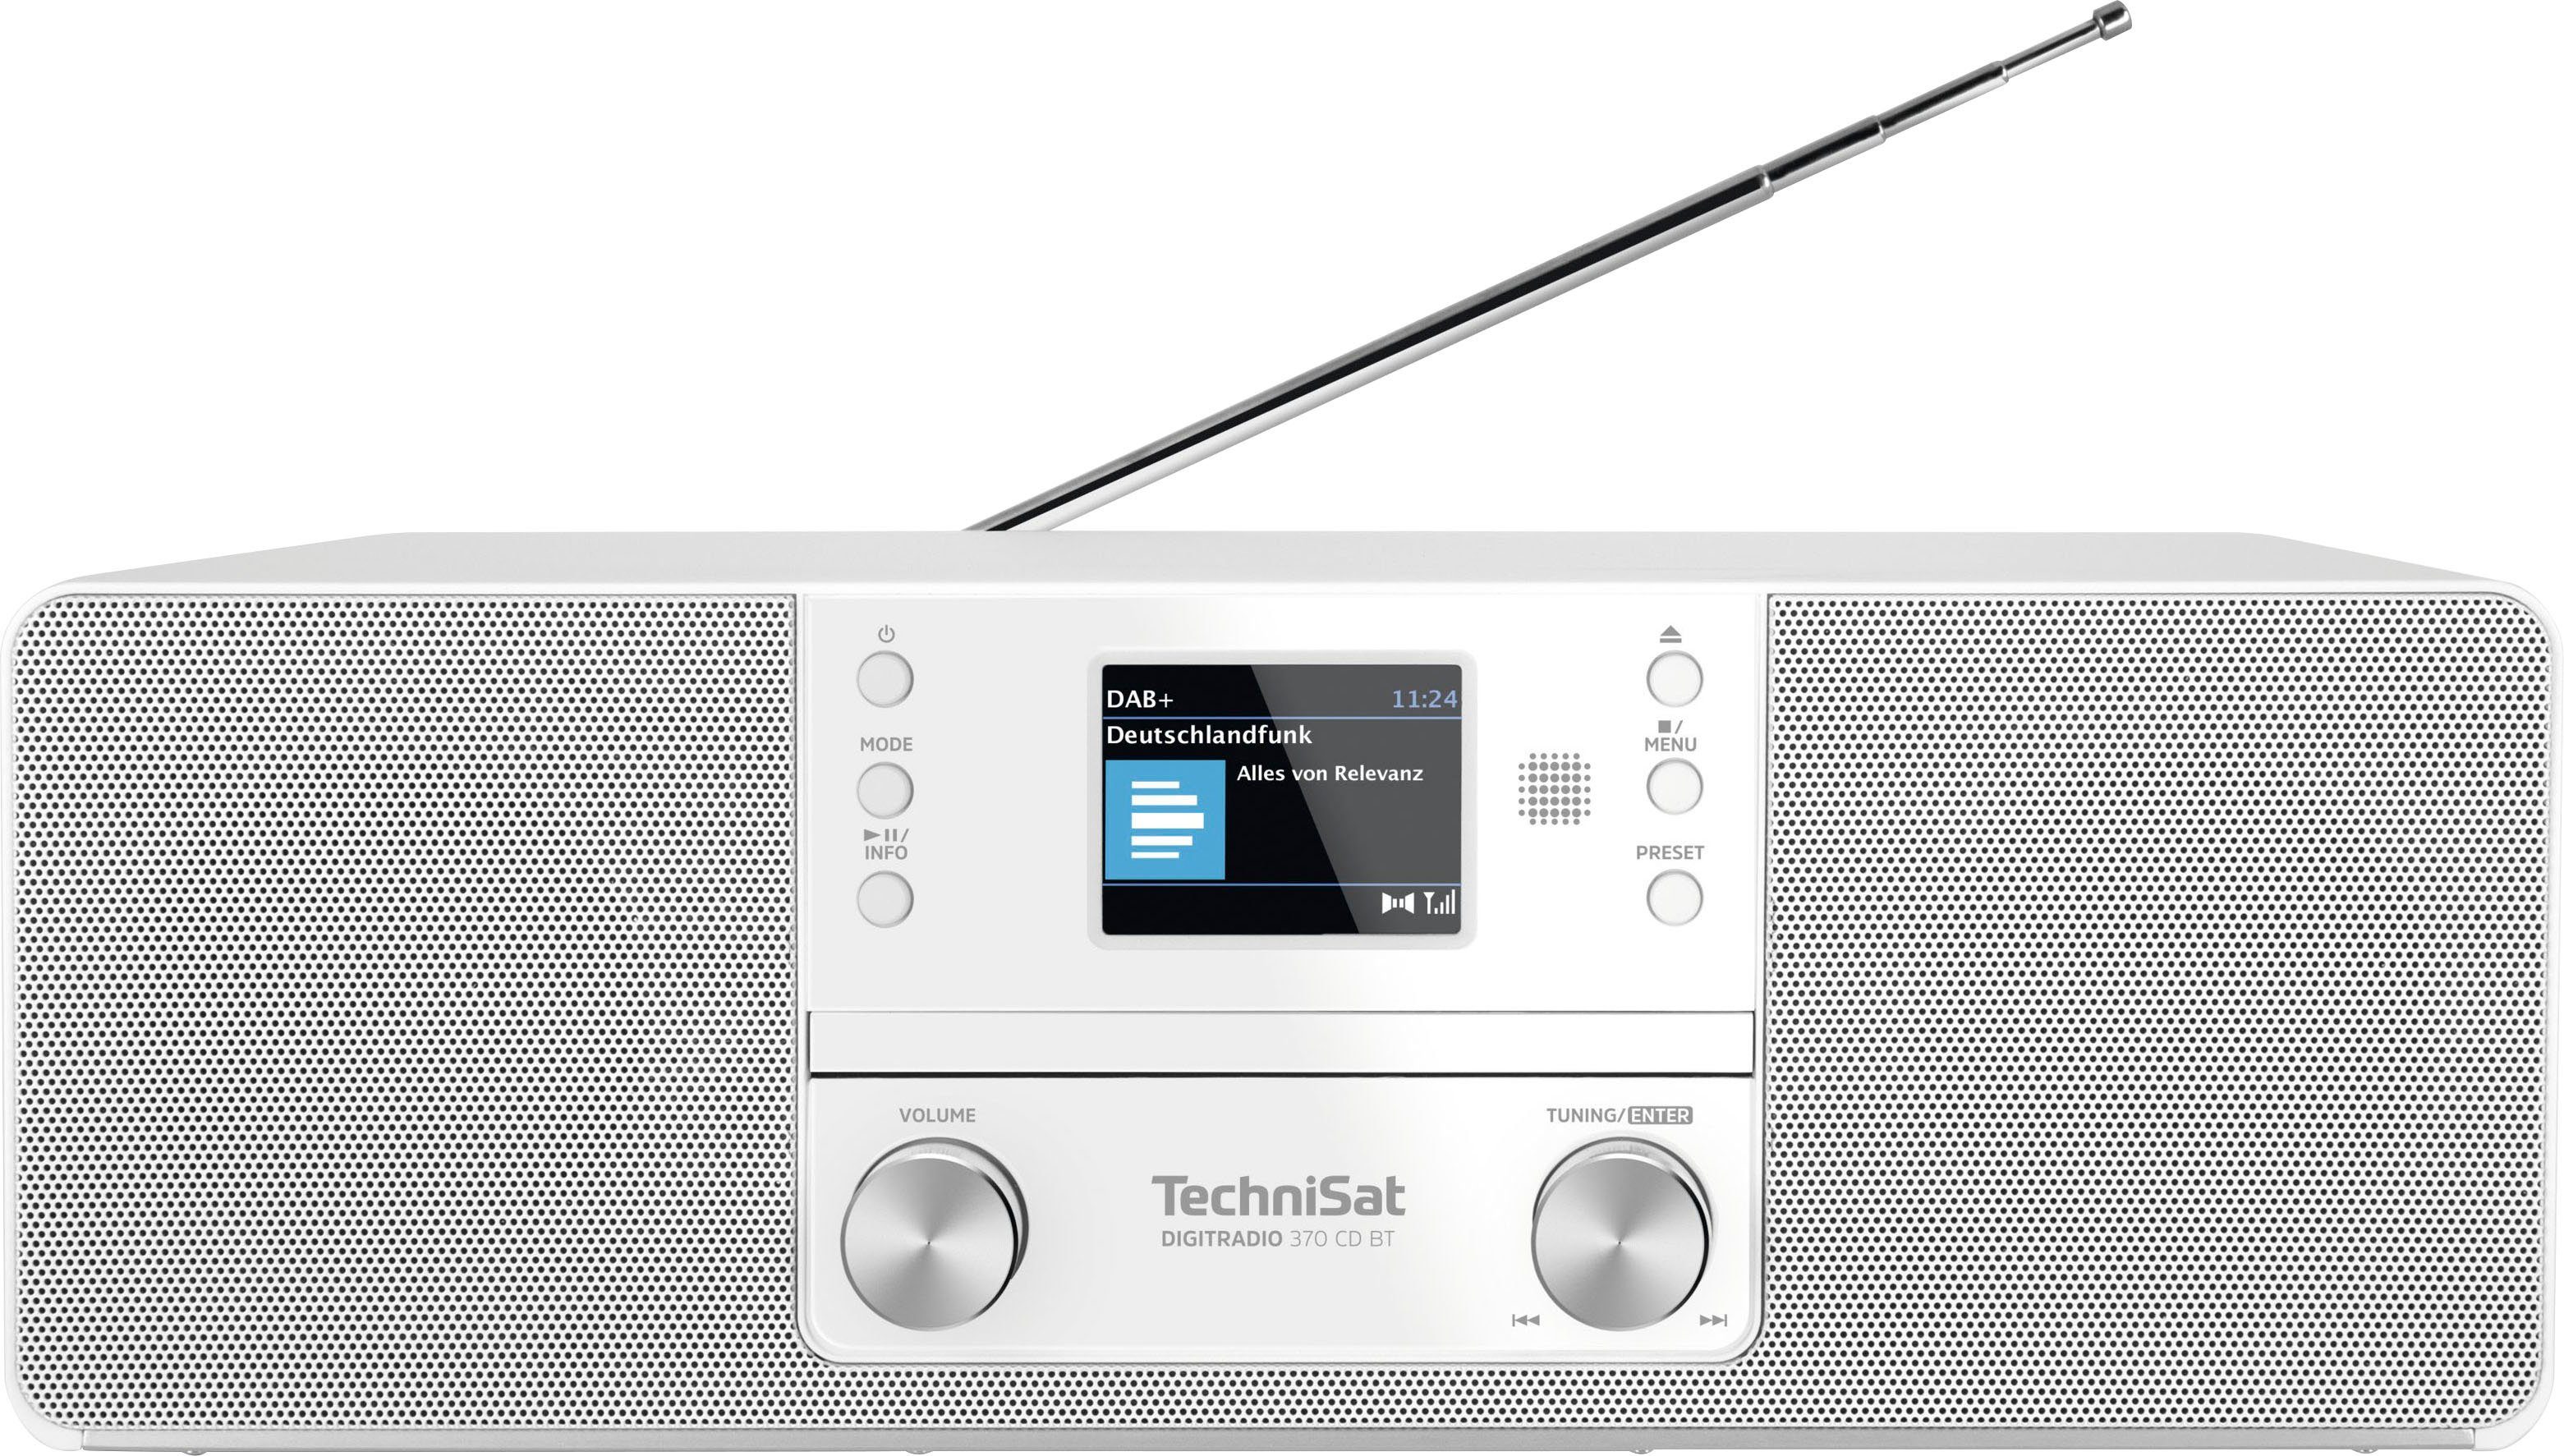 TechniSat DIGITRADIO 370 CD BT 10 W) (DAB), RDS, weiß (DAB) (Digitalradio mit UKW Digitalradio